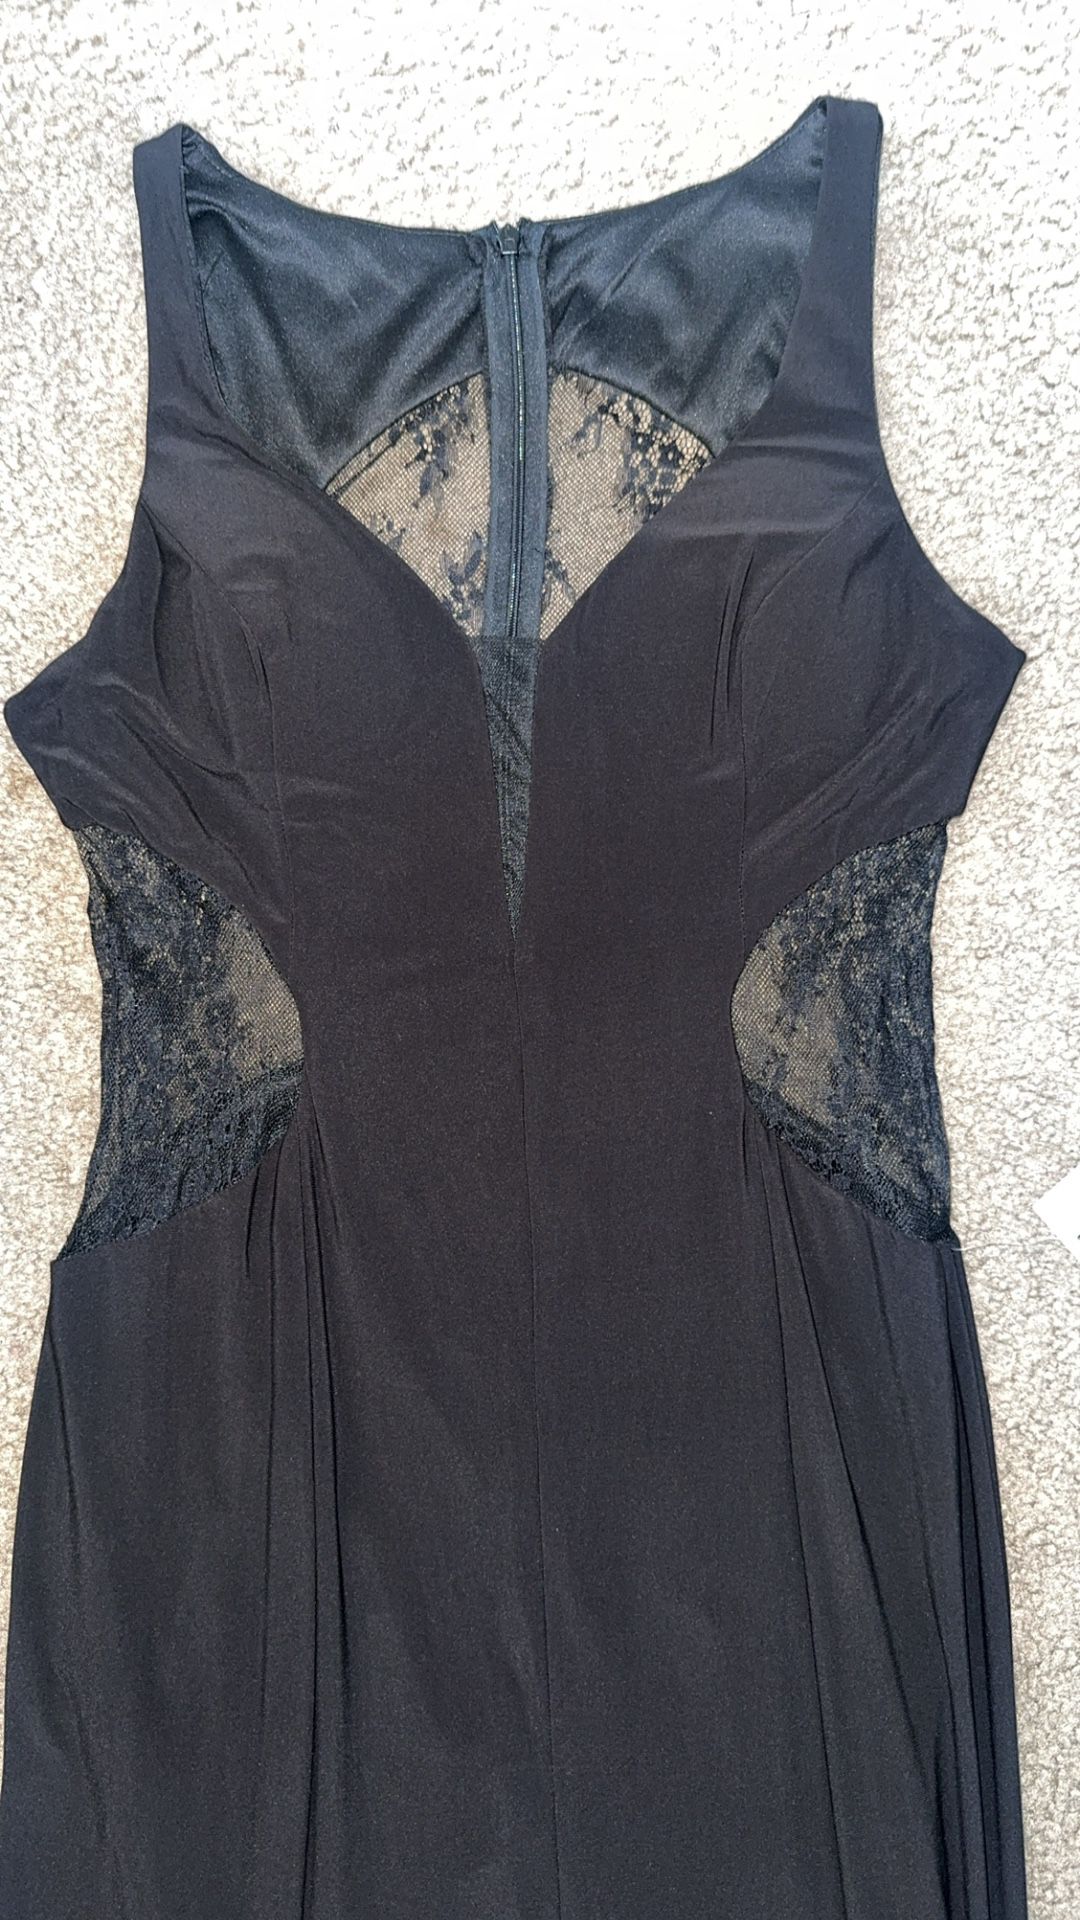 New Black Lace Dress Size Large